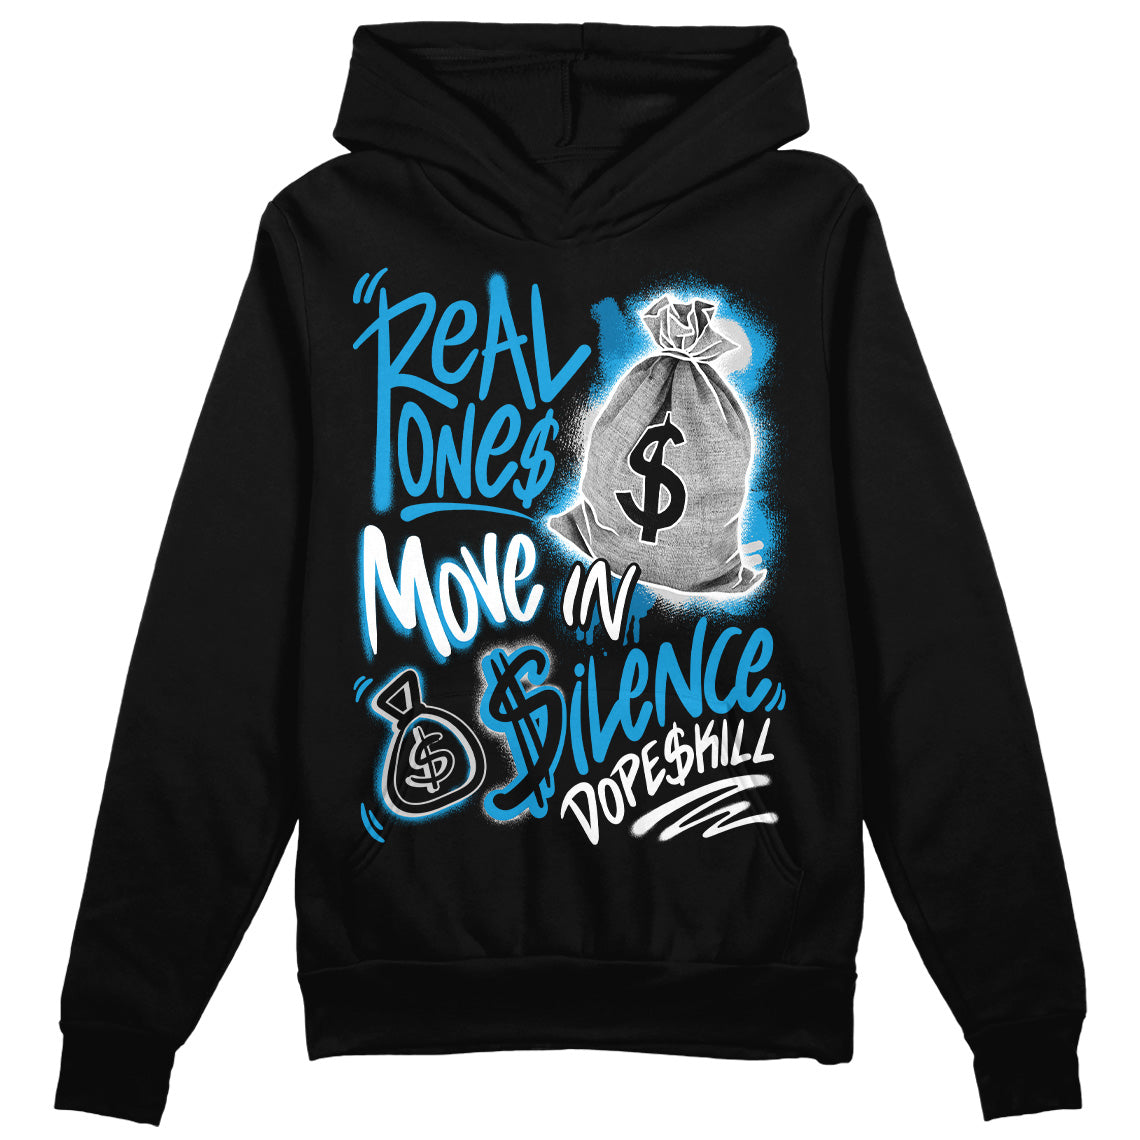 Jordan 4 Retro Military Blue DopeSkill Hoodie Sweatshirt Real Ones Move In Silence Graphic Streetwear - Black